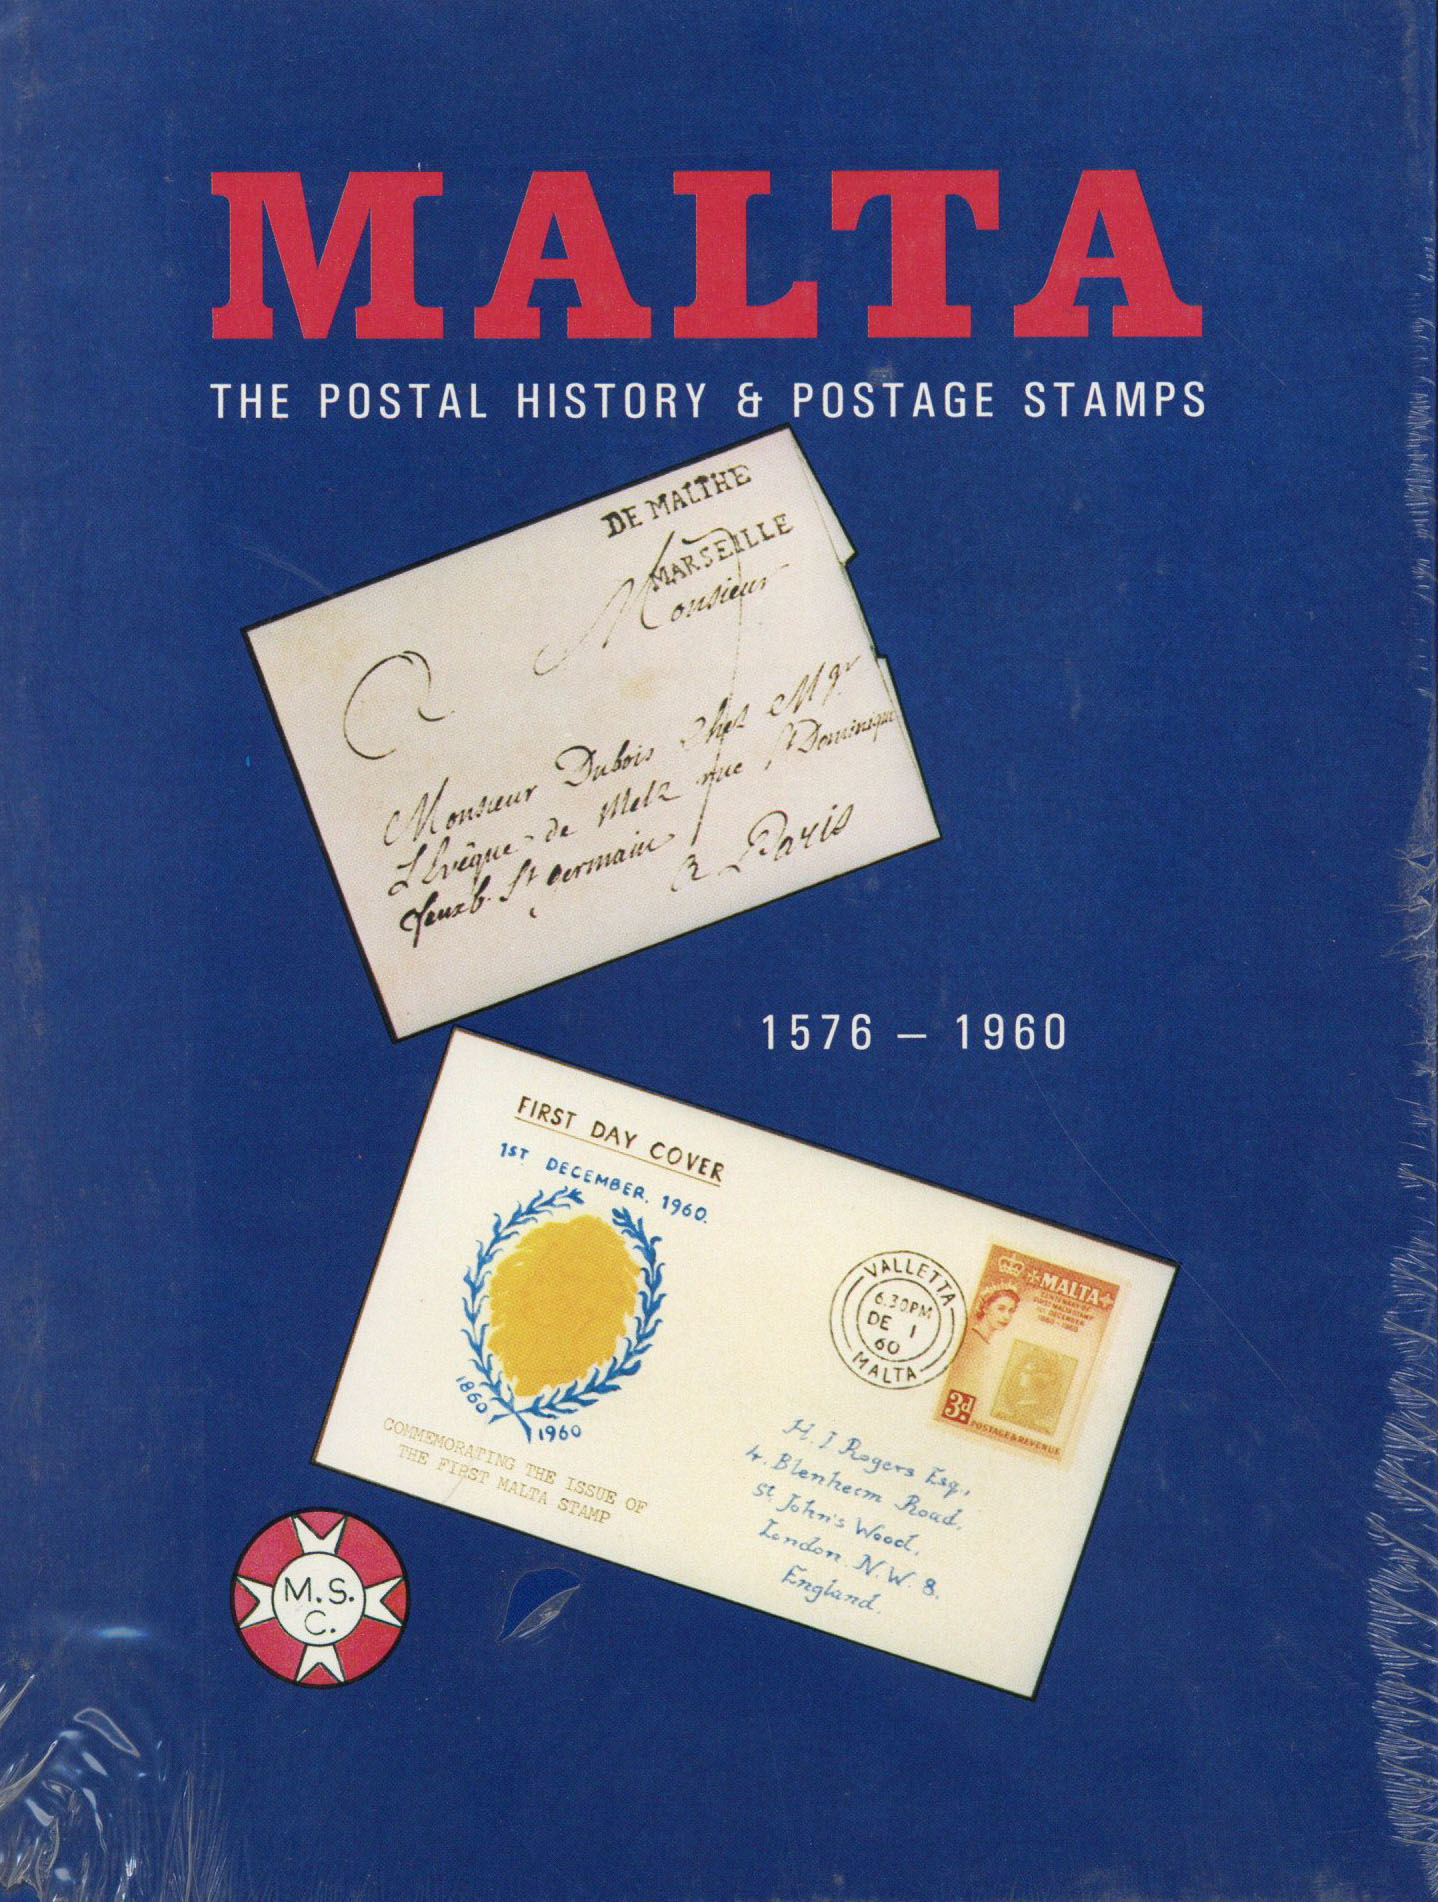 Malta Postal History and Postage Stamps